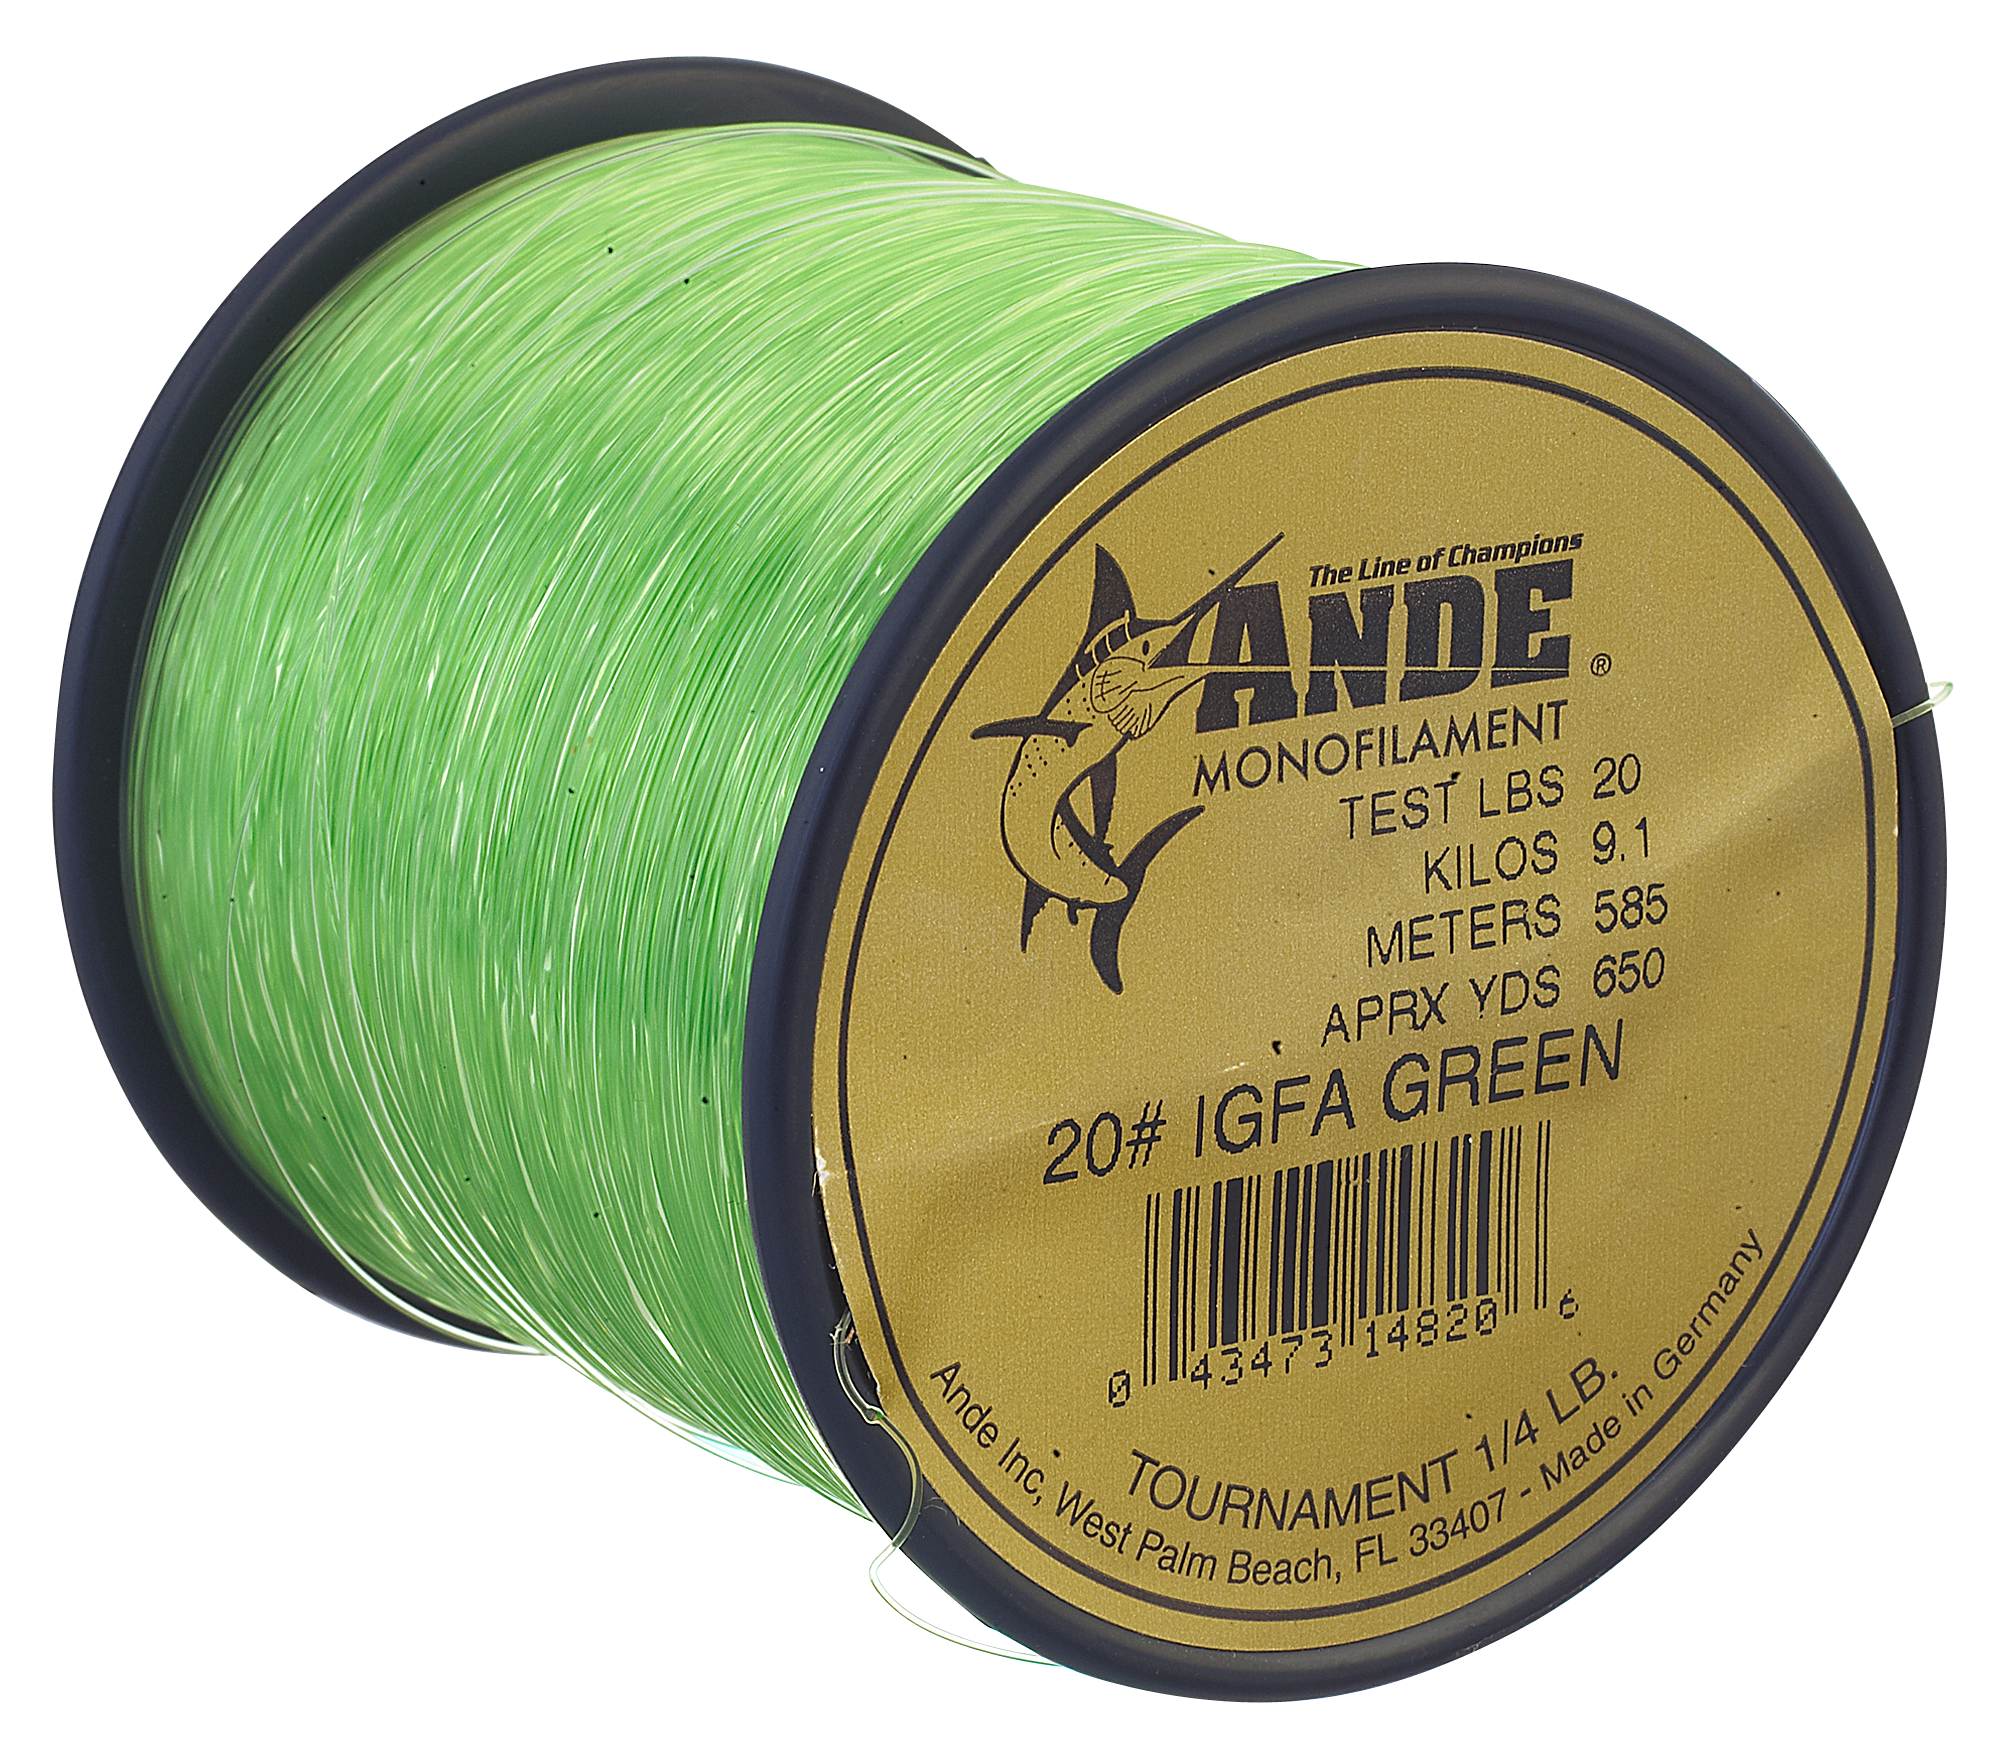 Ande Monofilament Line Envy Green, 20 -Pounds Test, Kuwait